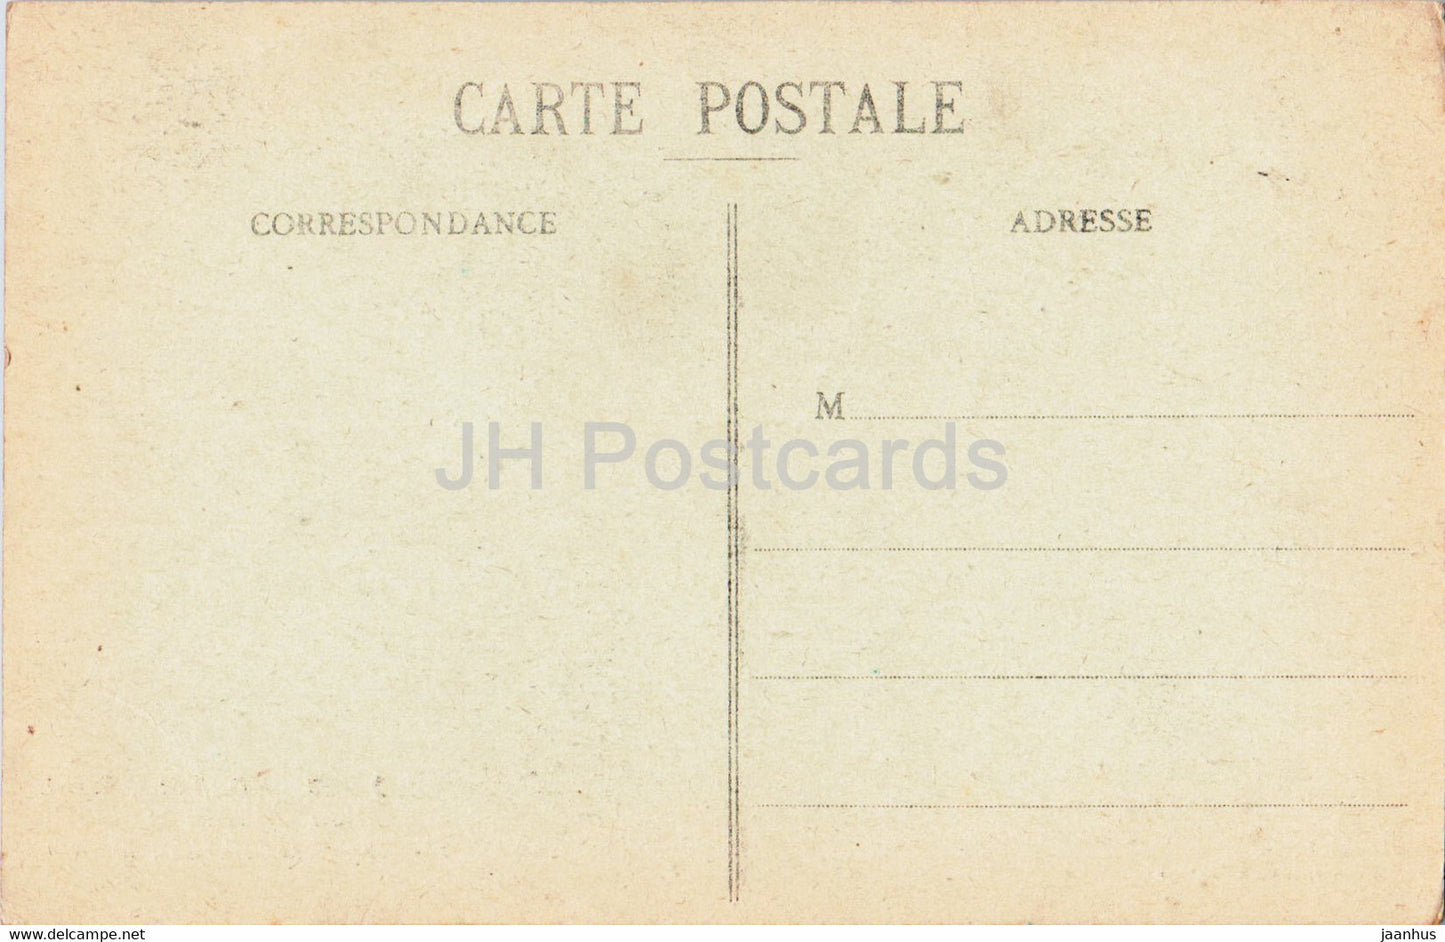 Mont St Michel - Abbaye - Galeries du Cloitre - 39 - old postcard - France - unused